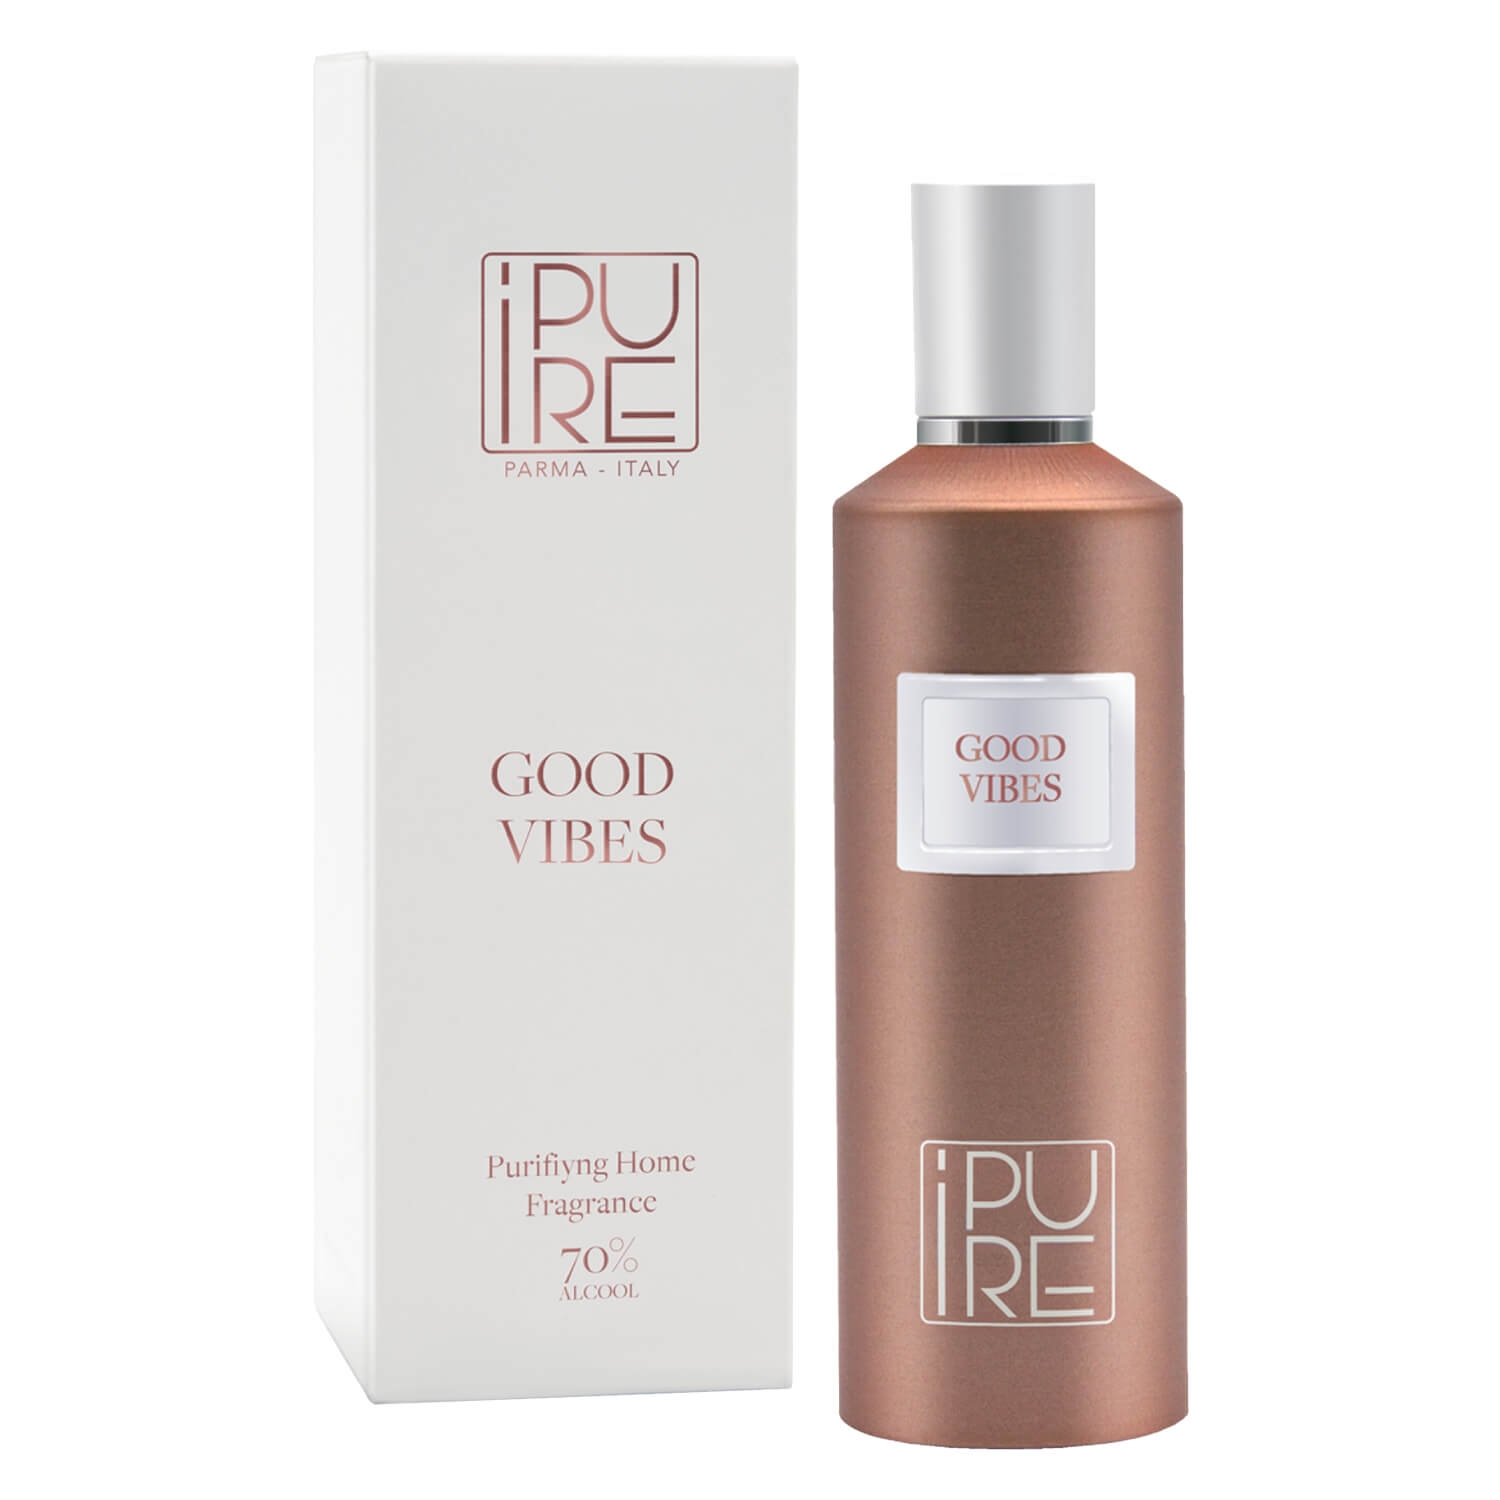 Produktbild von iPURE - Purifying Home Fragrance Spray GOOD VIBES